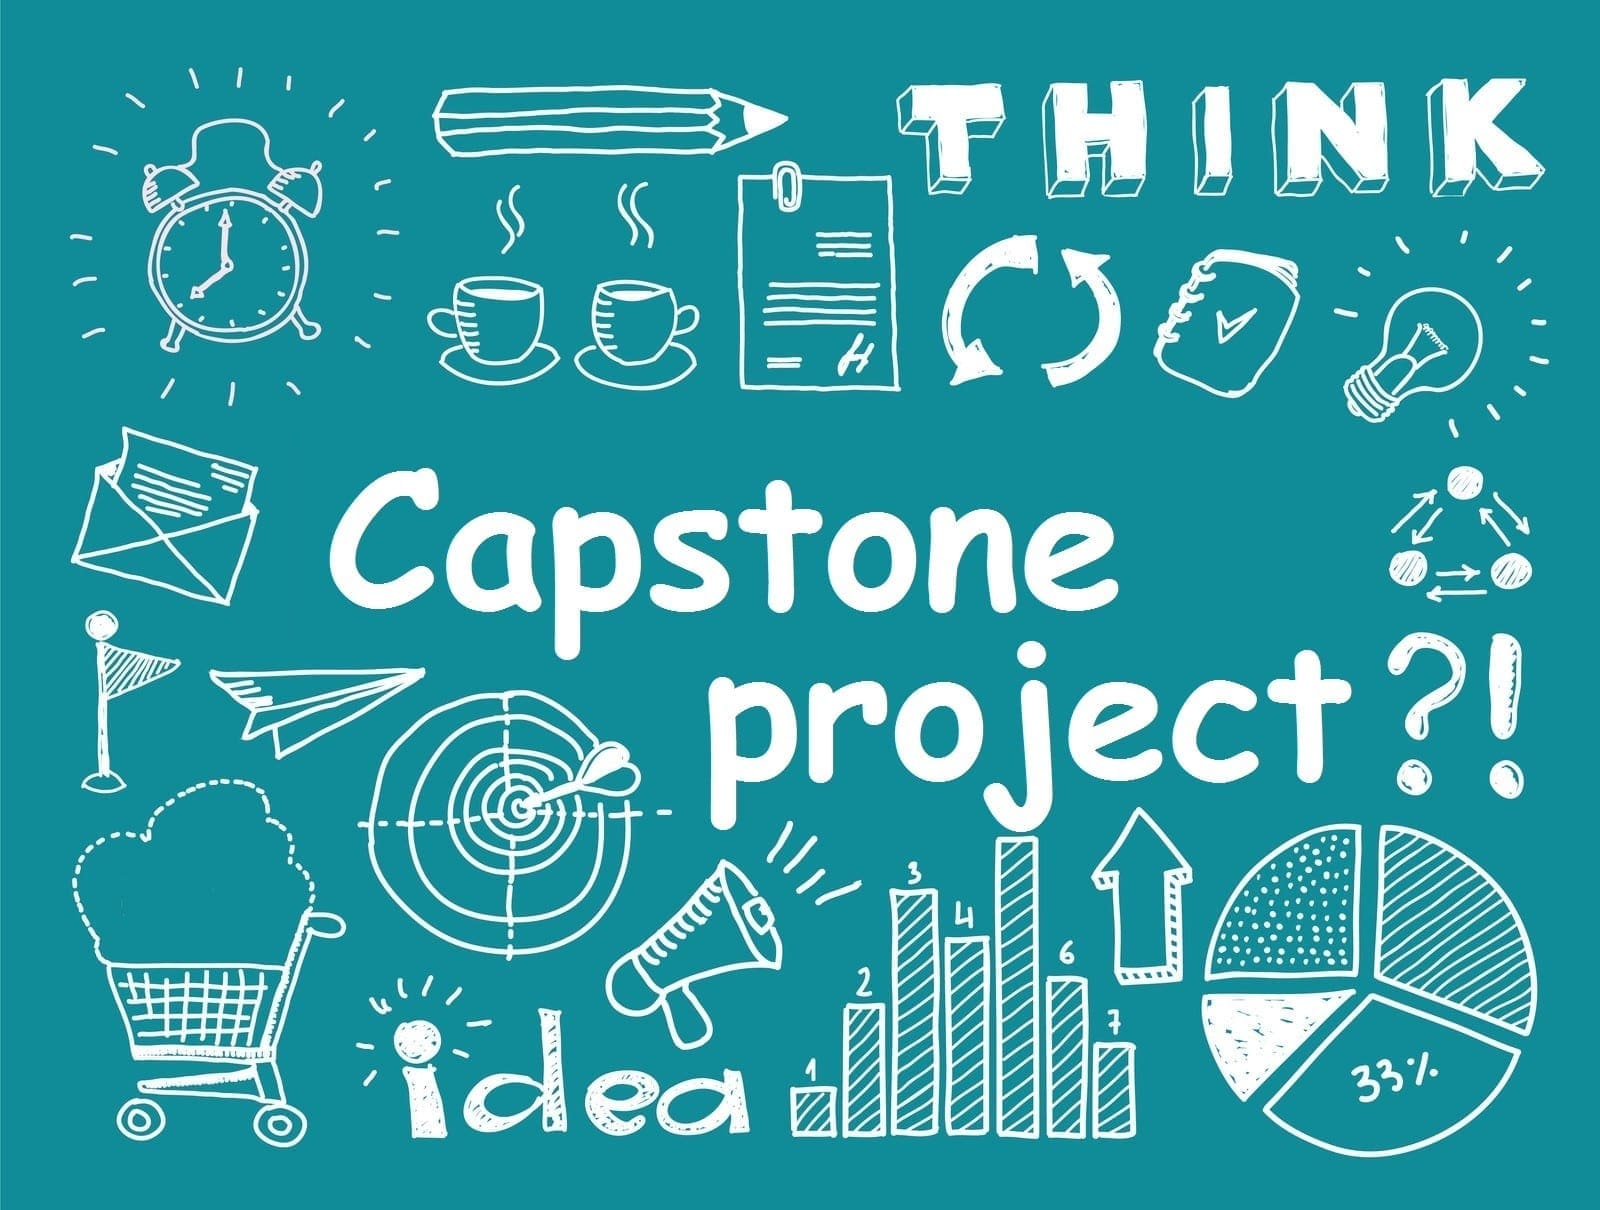 capstone prohect